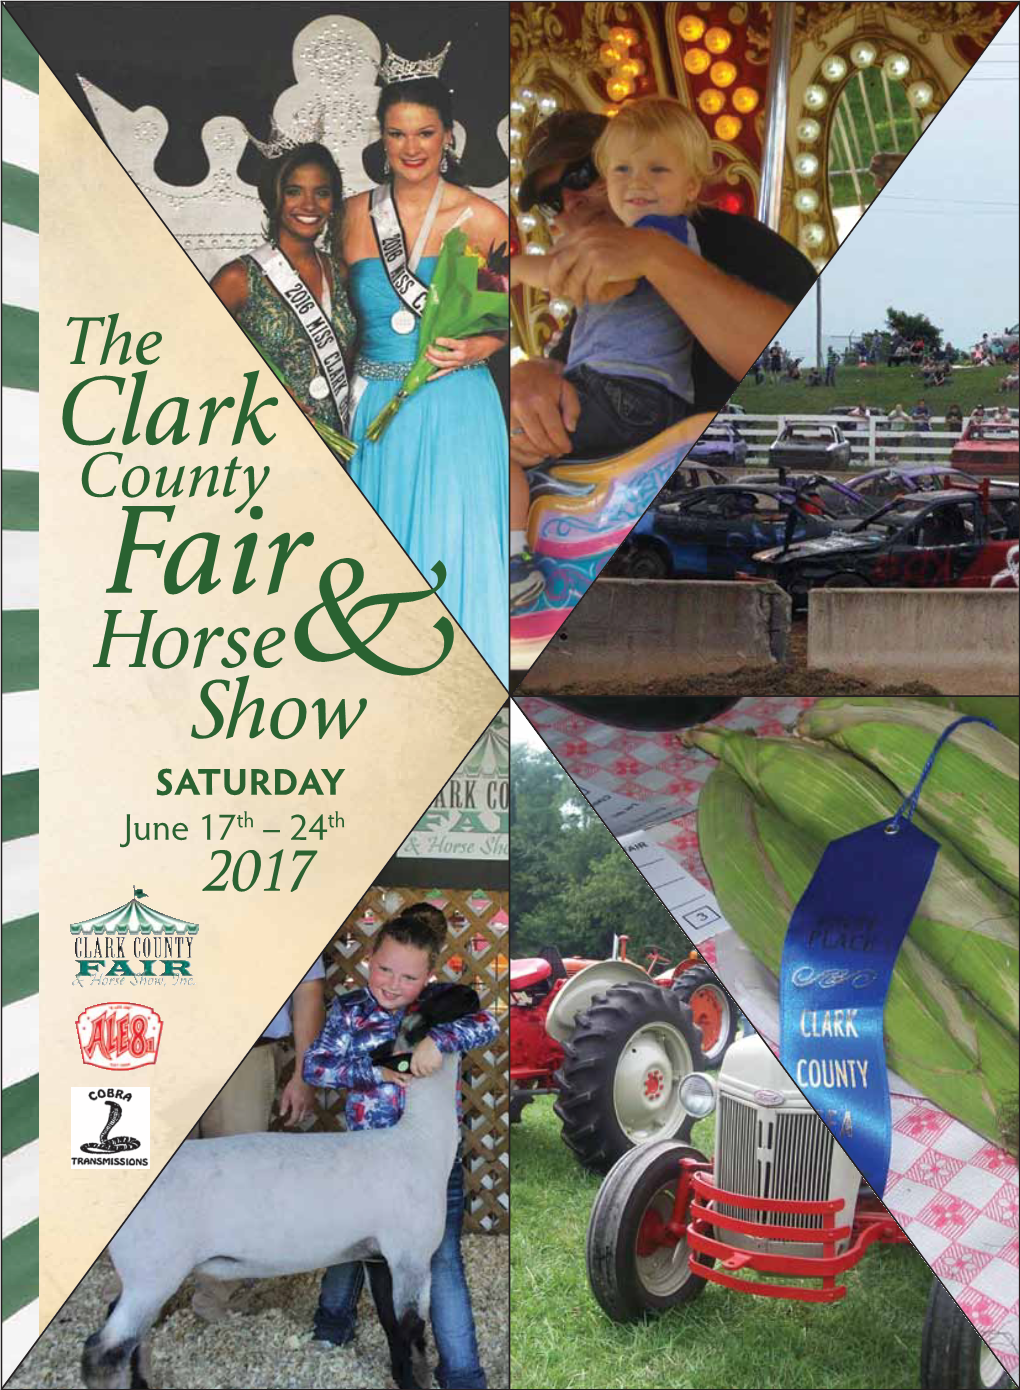 The County Fair Clark Horse Show 2017 Saturday